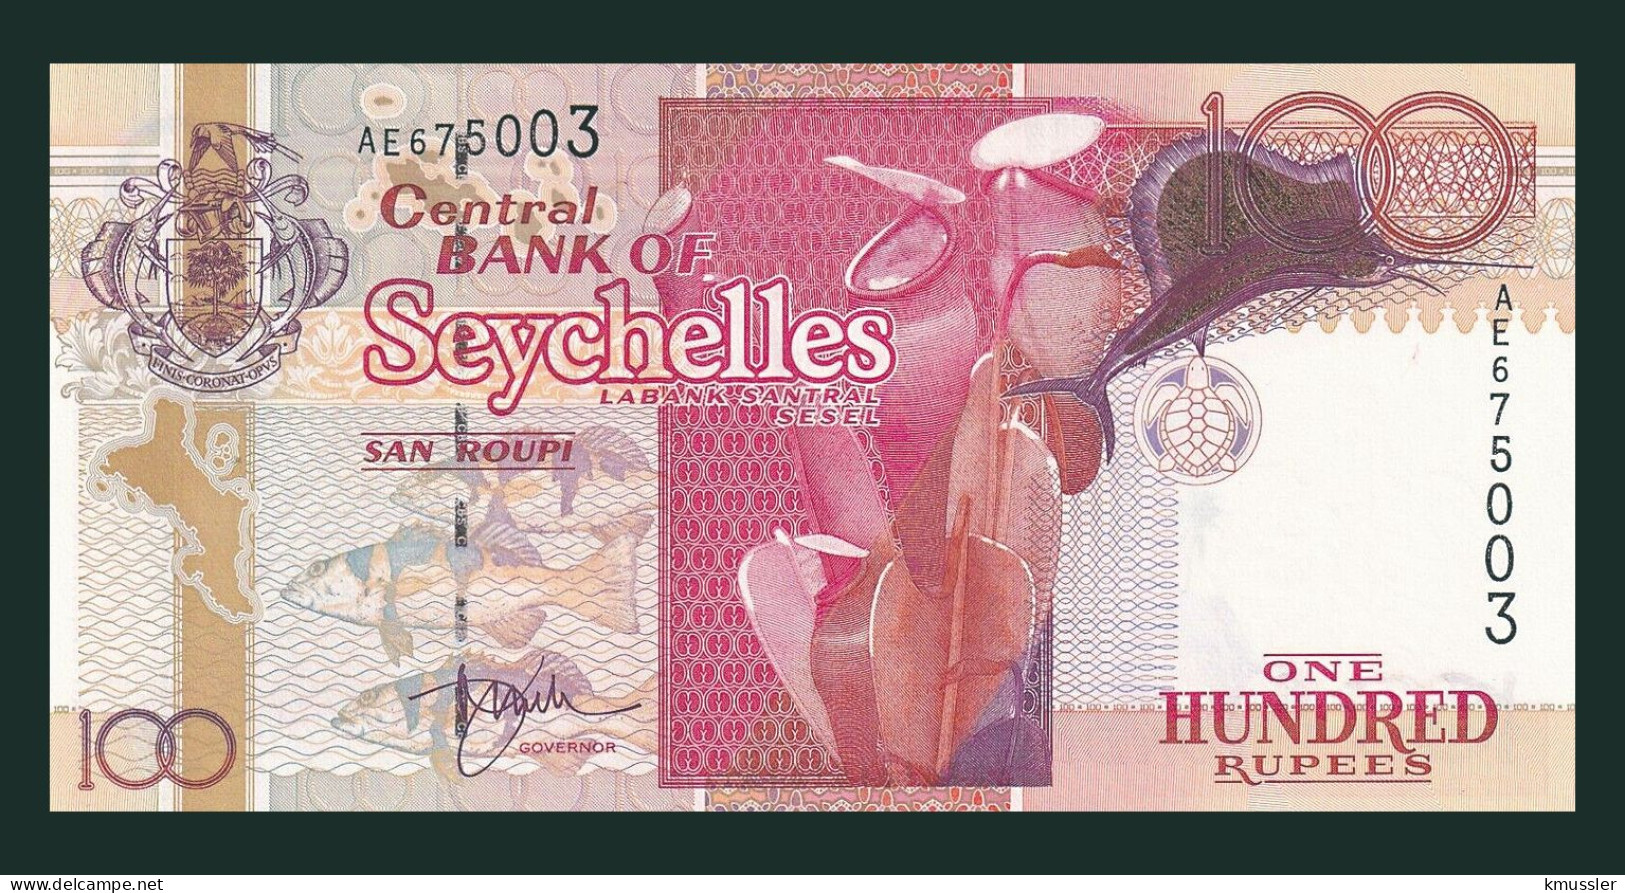 # # # Banknote Seychellen (Seychelles) Central Bank 100 Rupees 2001 (P-40) UNC # # # - Seychelles